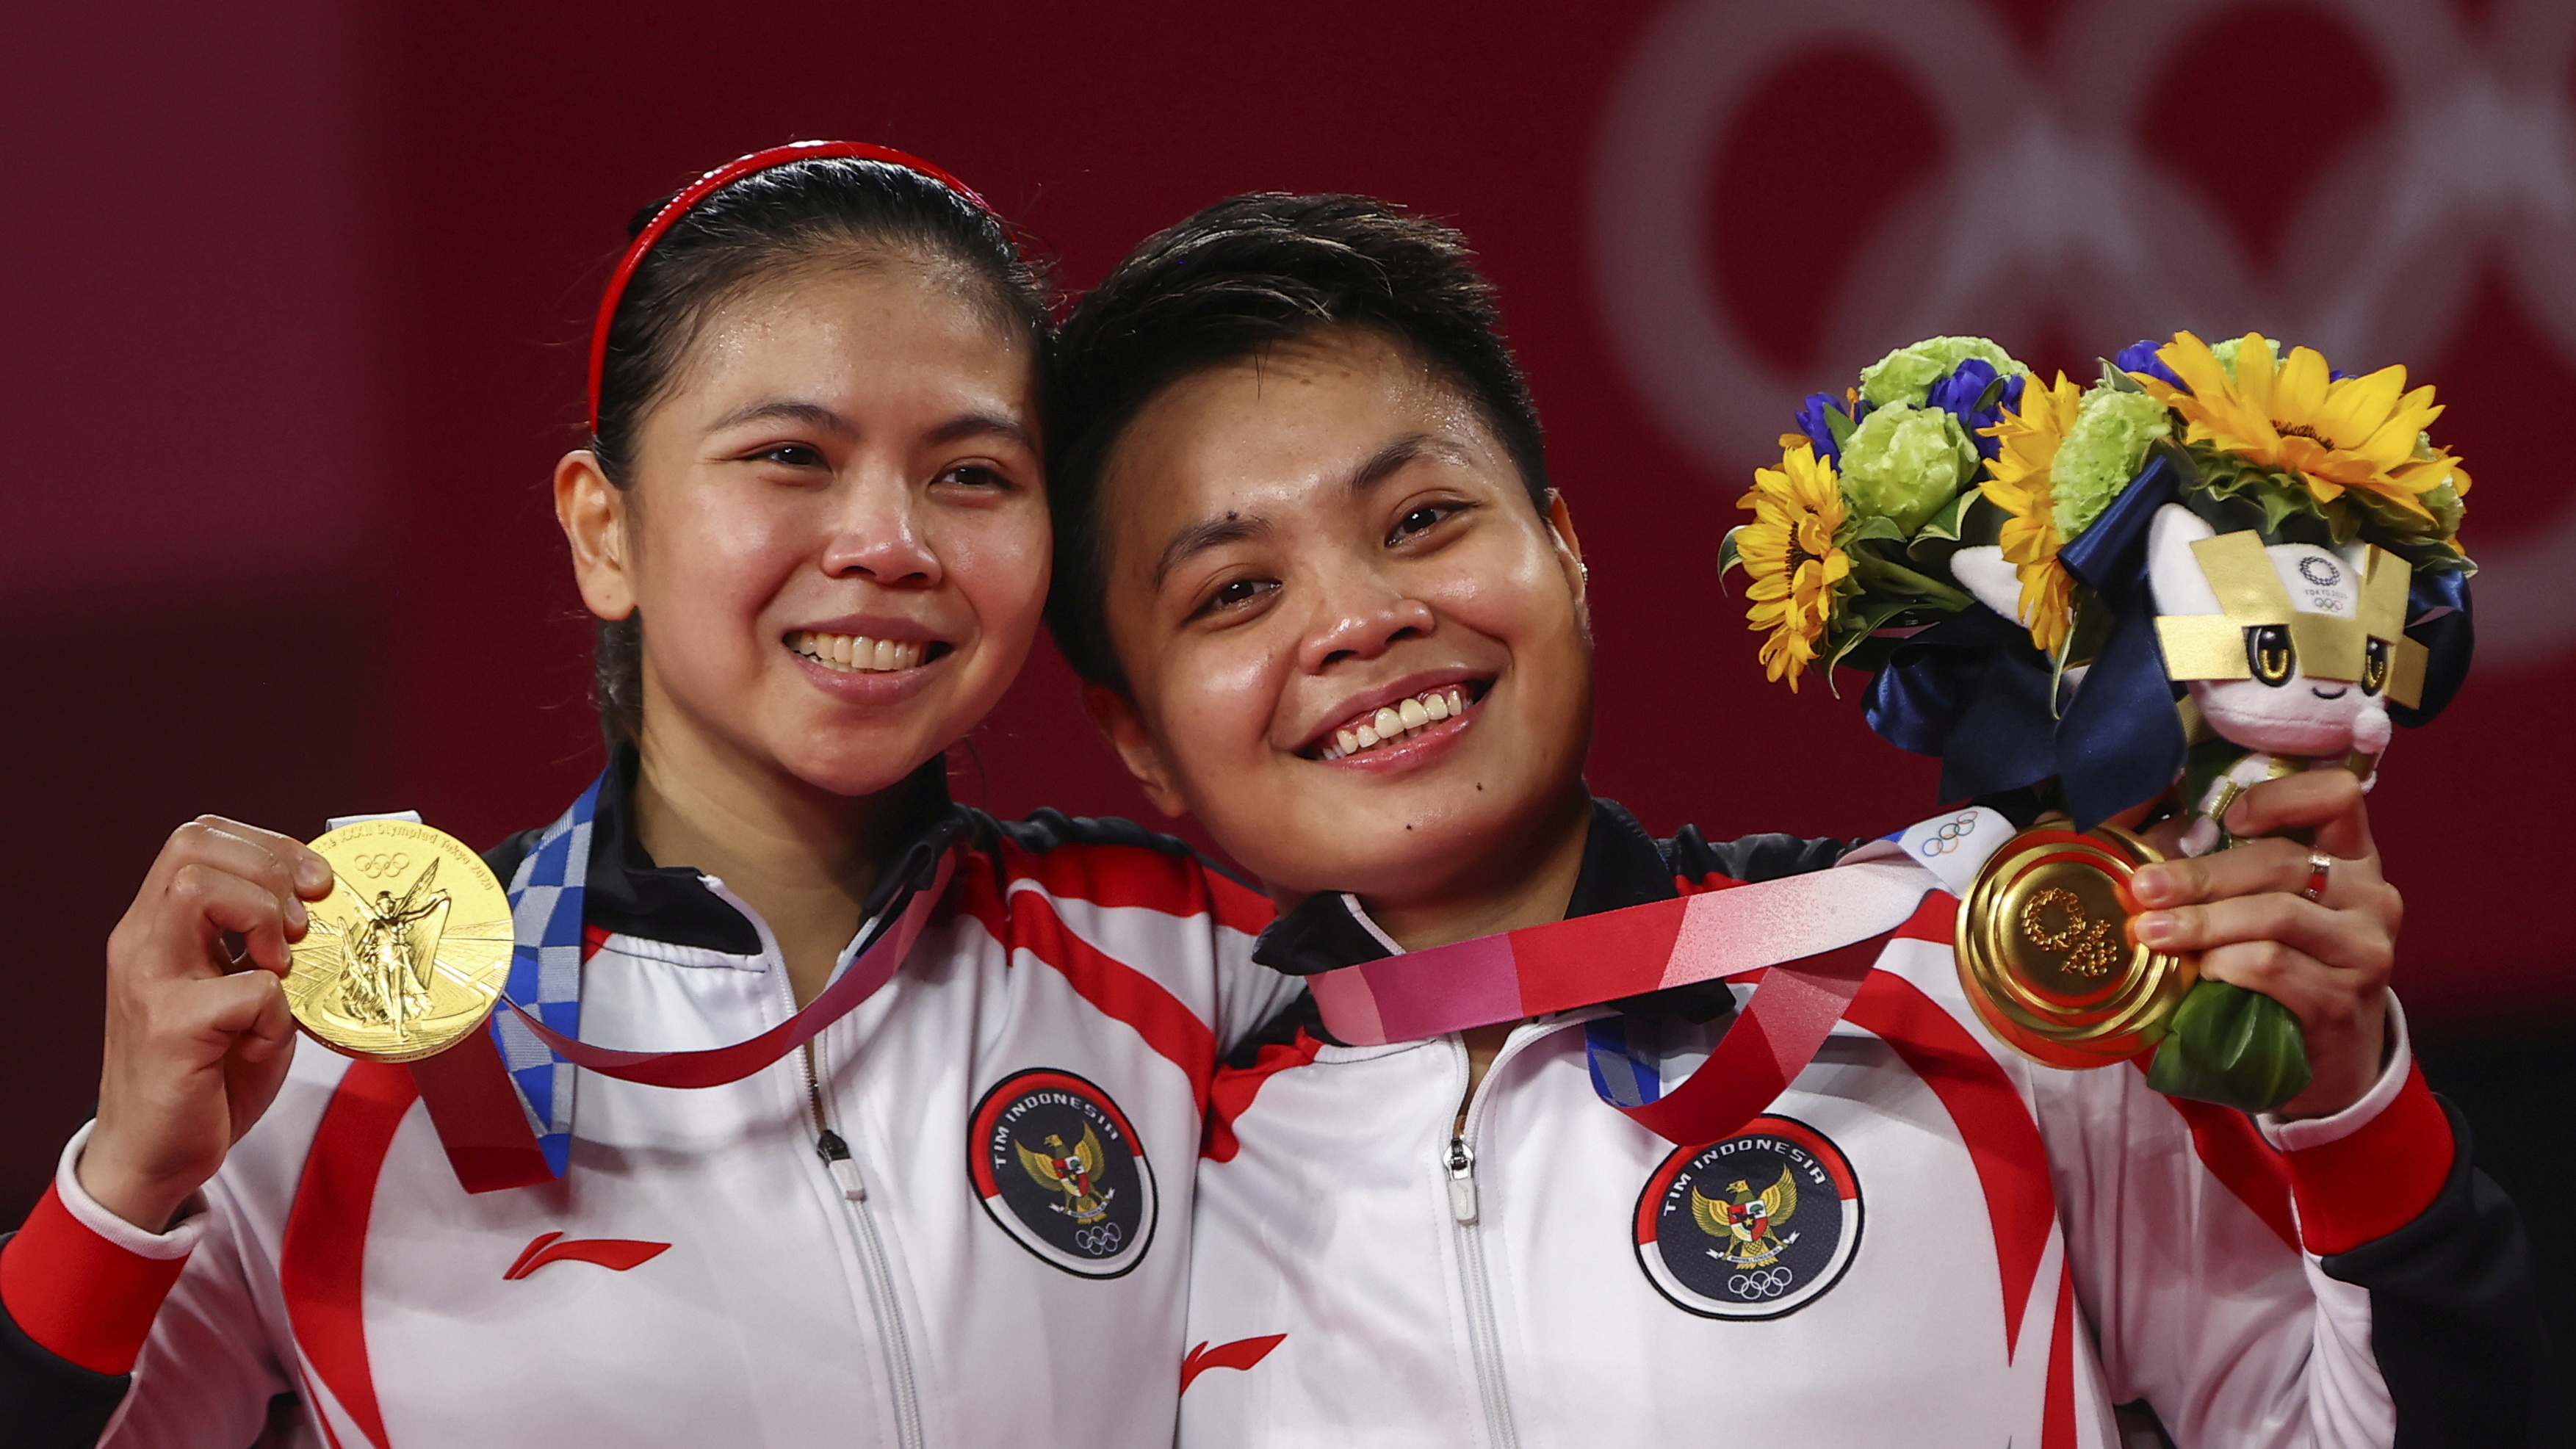 Badminton - Women's Doubles - Medal Ceremony